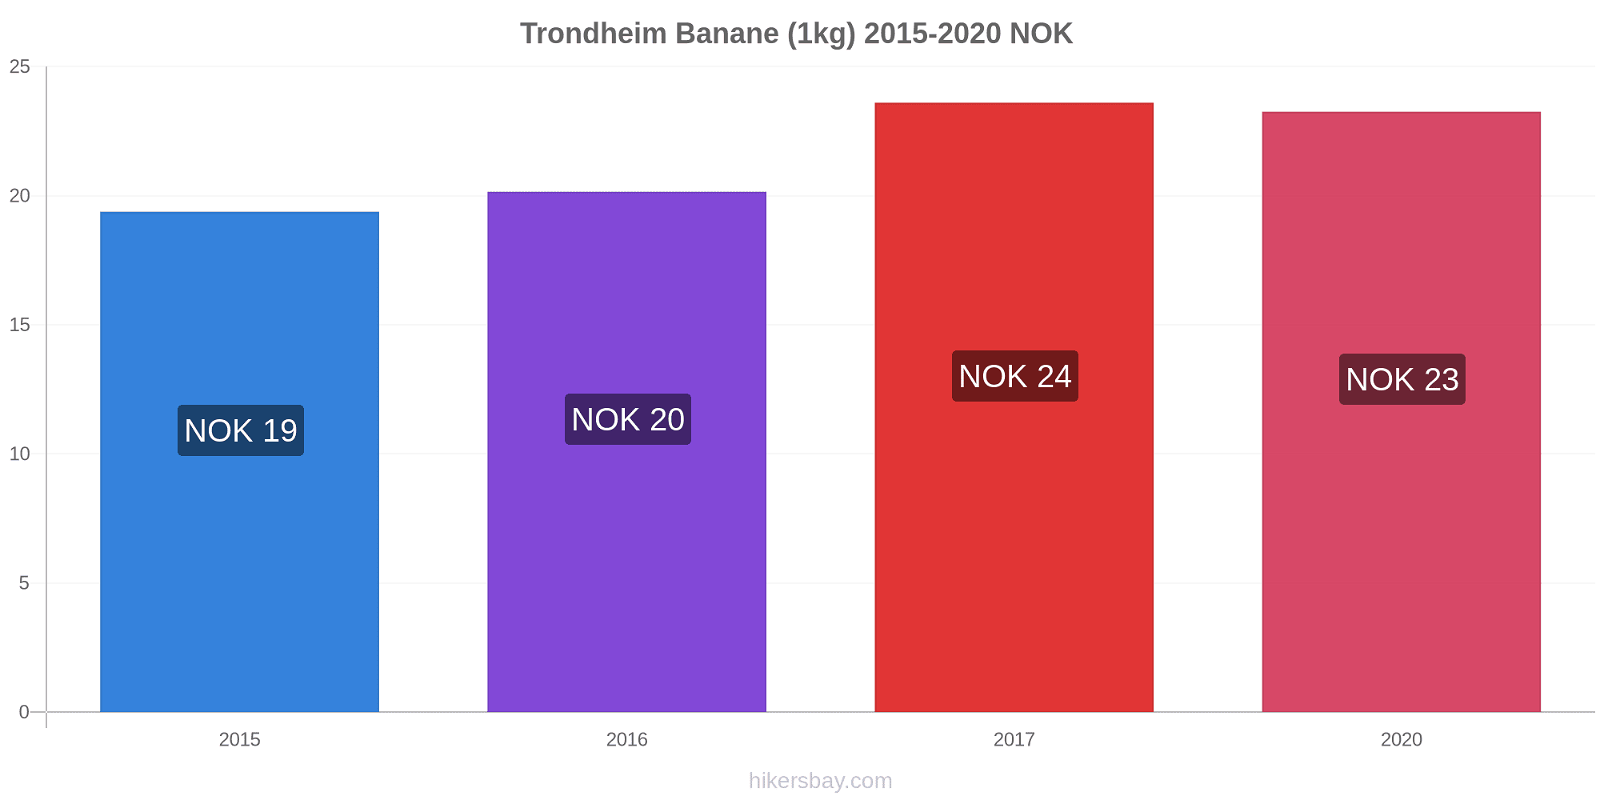 Trondheim variazioni di prezzo Banana (1kg) hikersbay.com